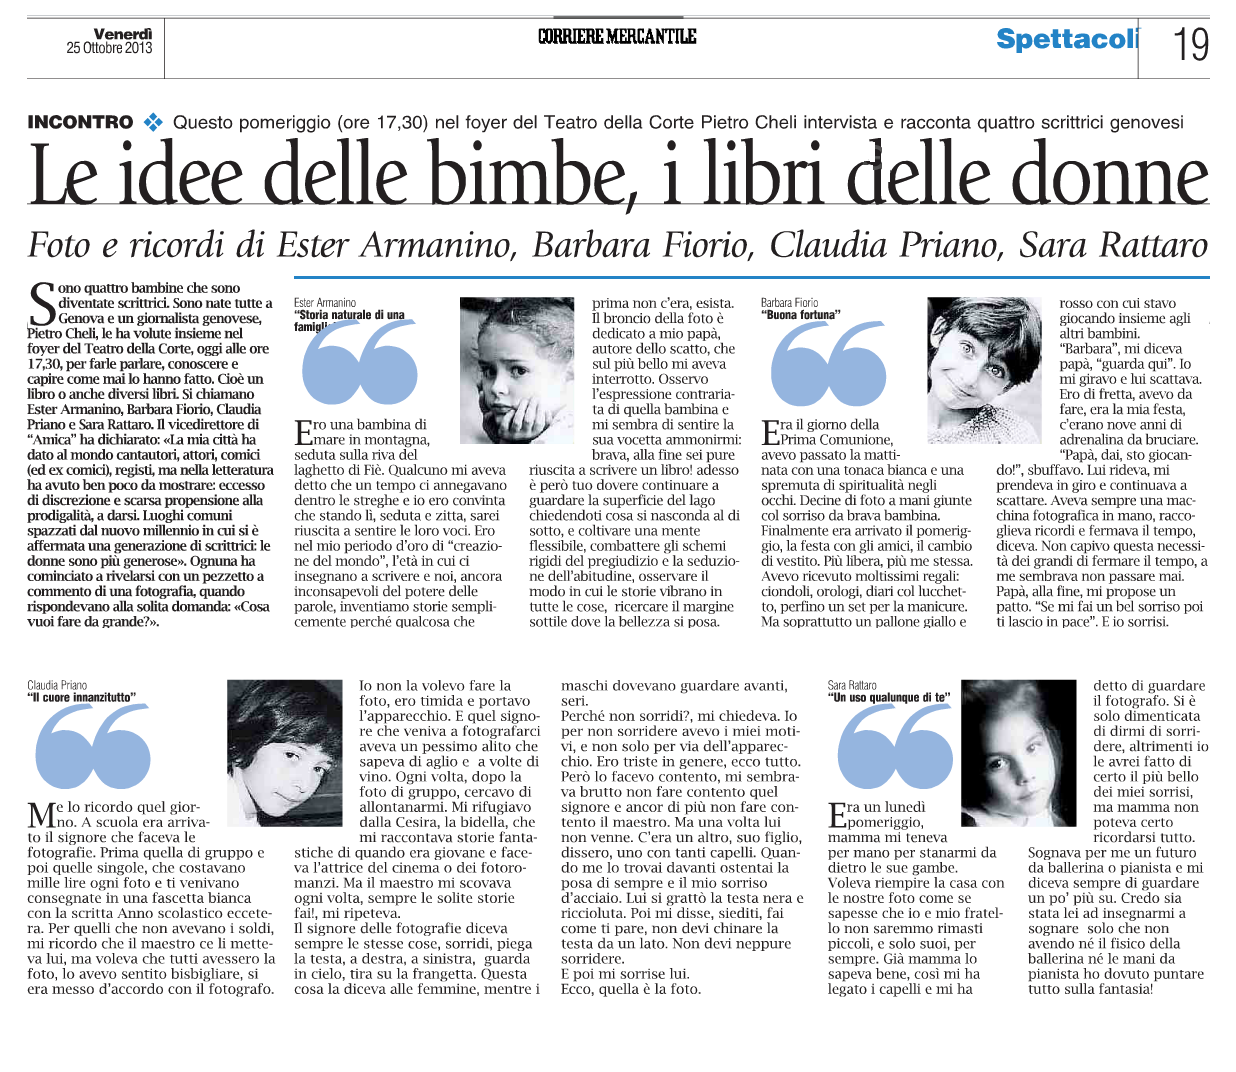 Corriere Mercantile, 25 ott 2013, Luogo di nascita Genova